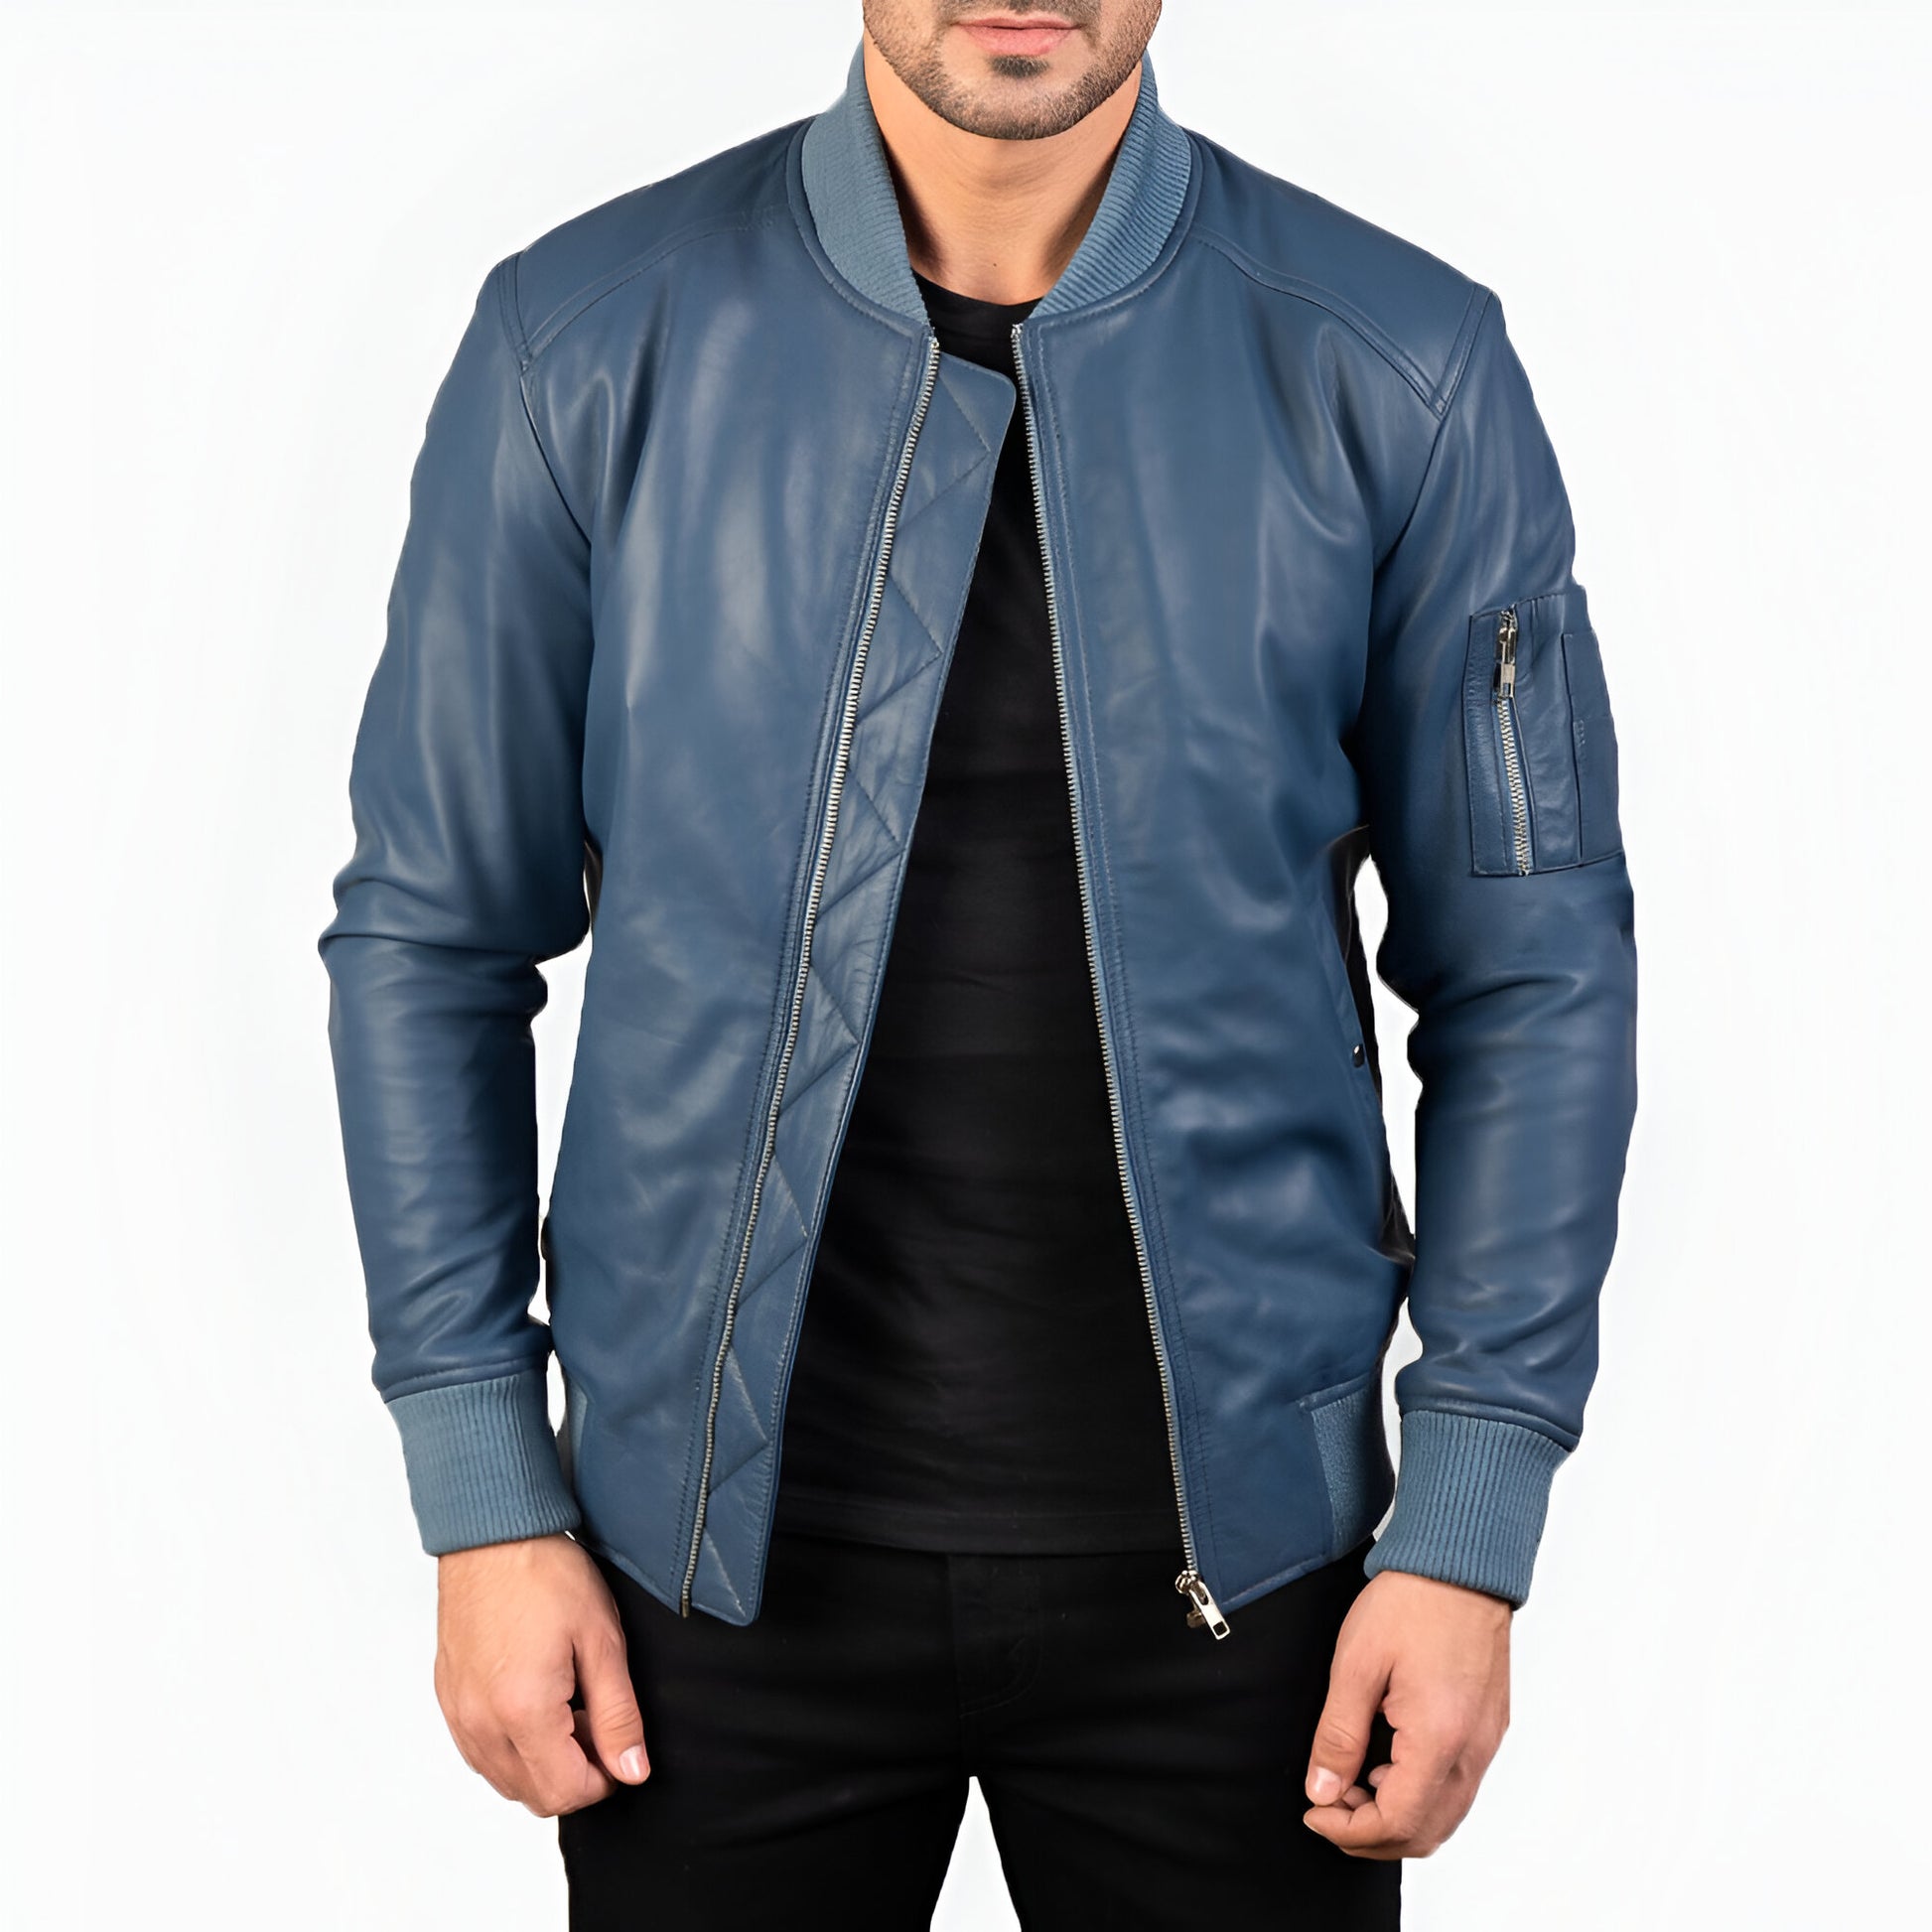 Dicks Leather Blue Leather Bomber Jacket